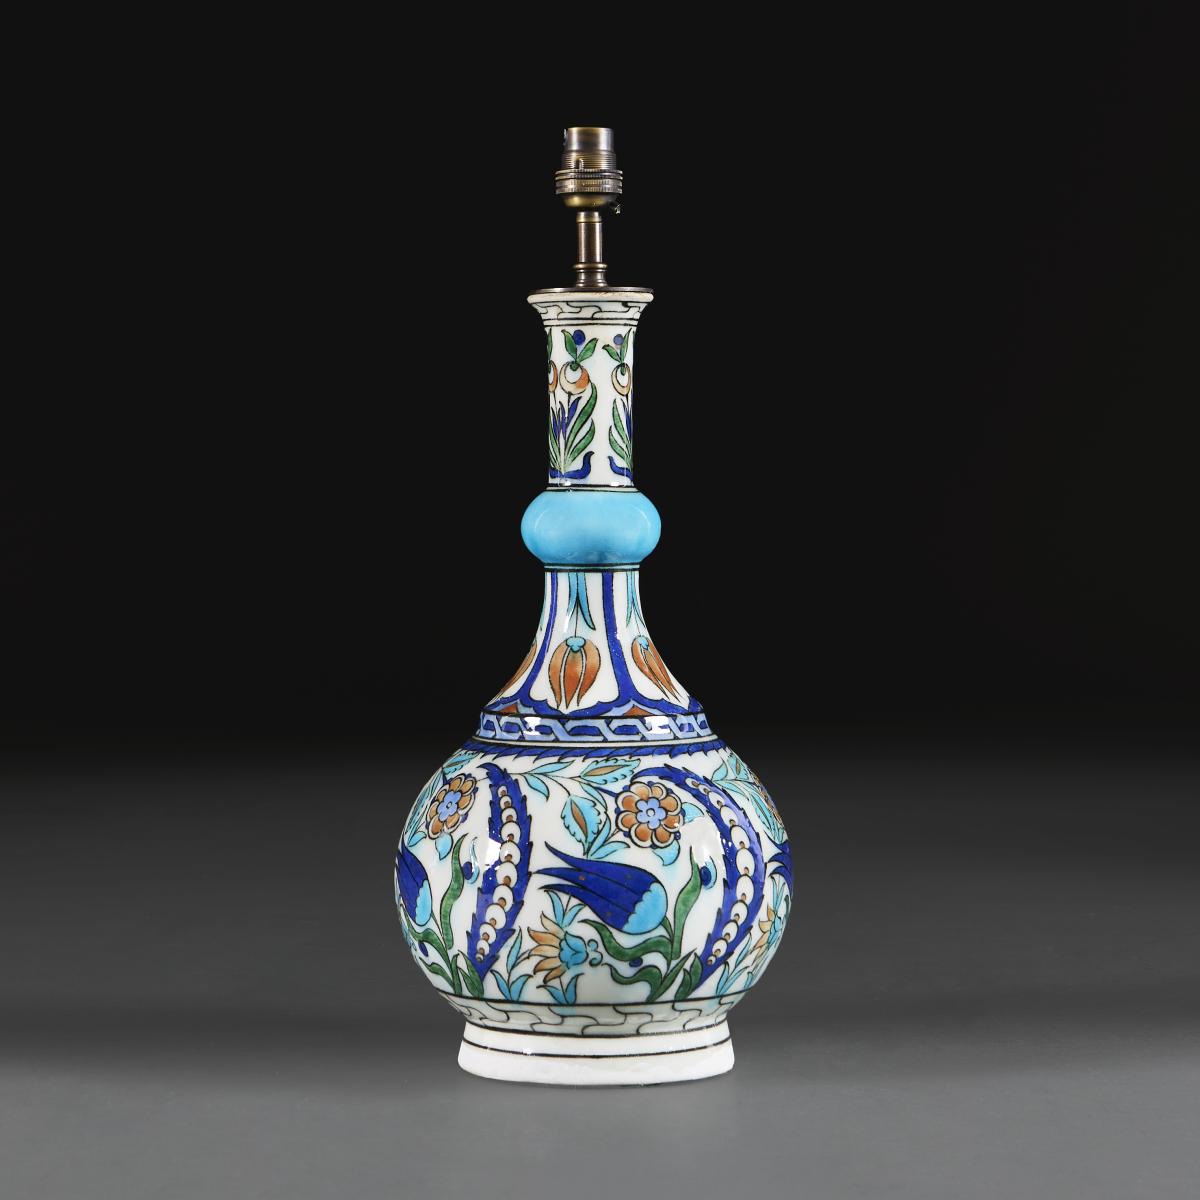 A Samson Iznik-Style Bottle Vase as a Lamp